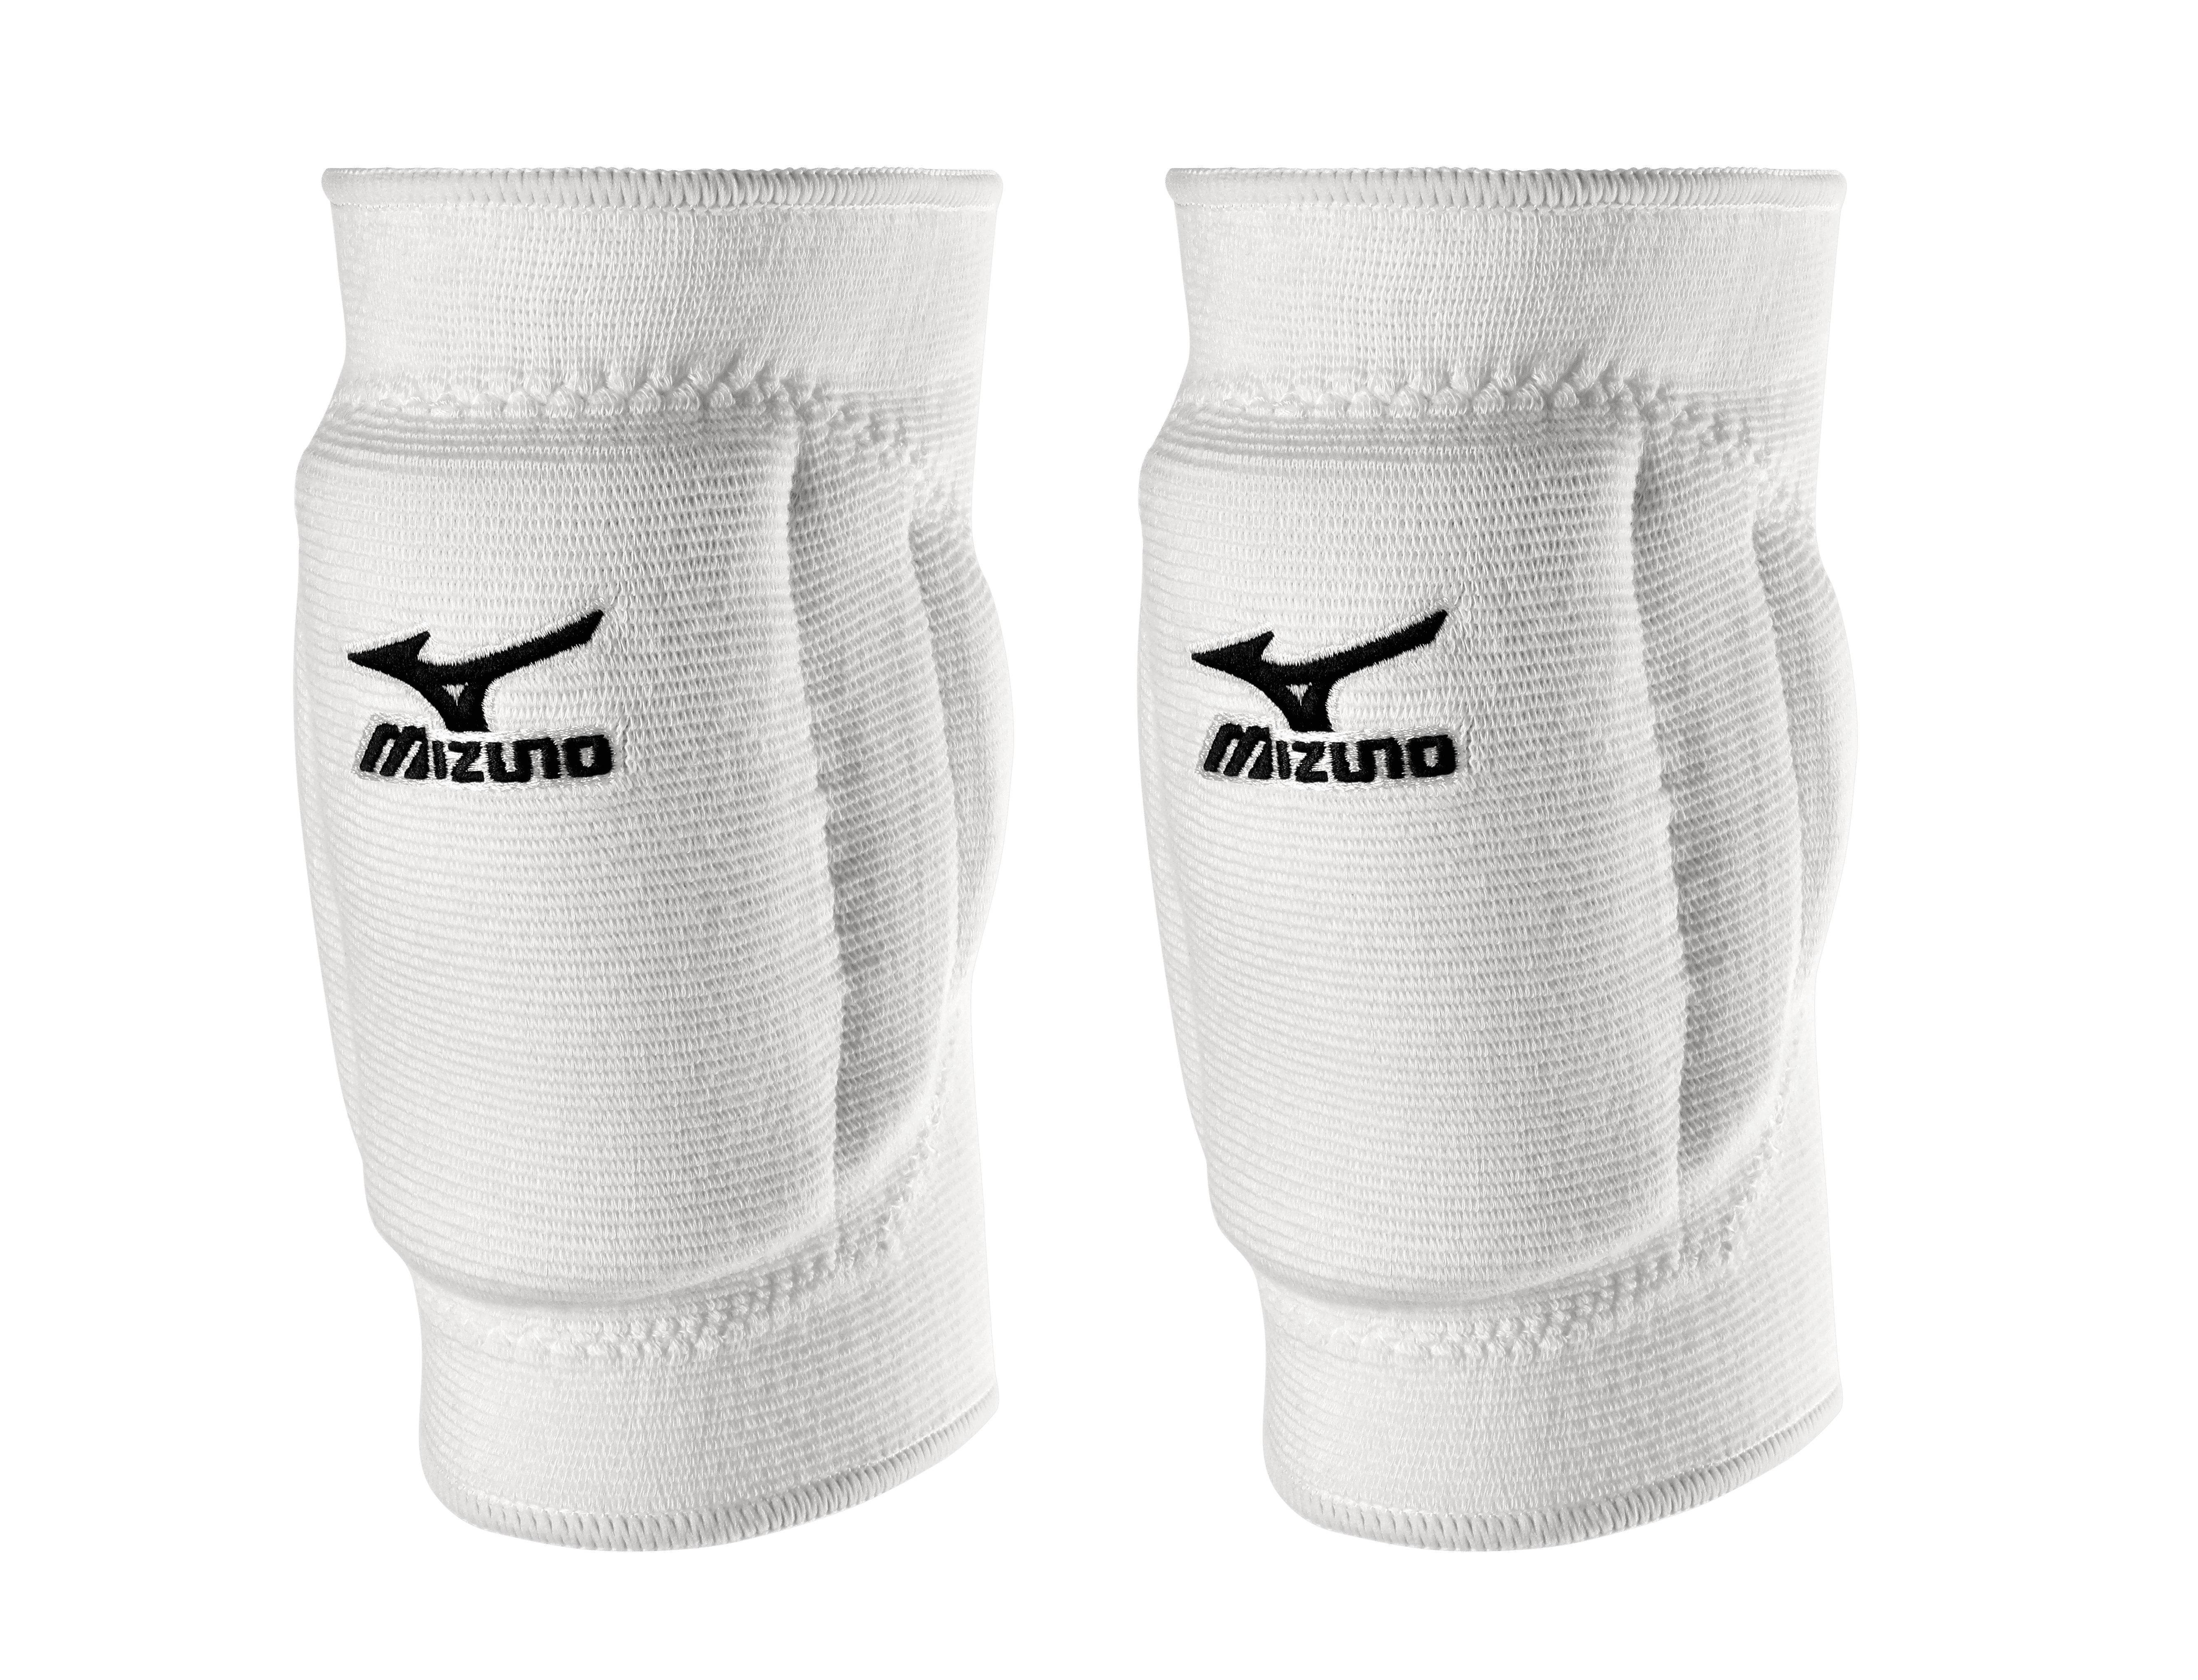 Nike vs. Mizuno, Knee Pad Edition